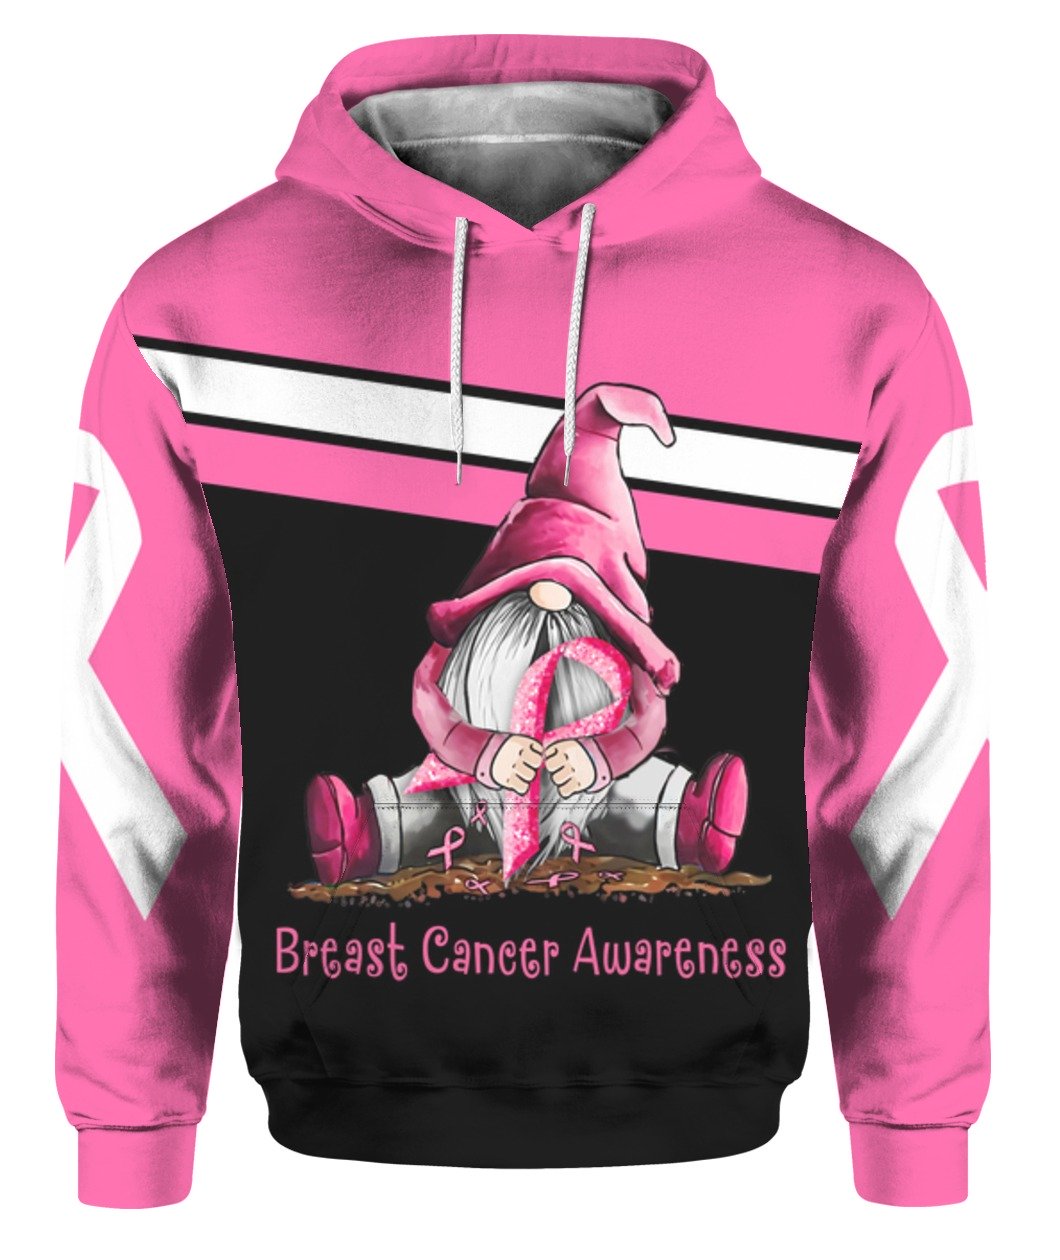 Gnome breast cancer awareness full printing hoodie